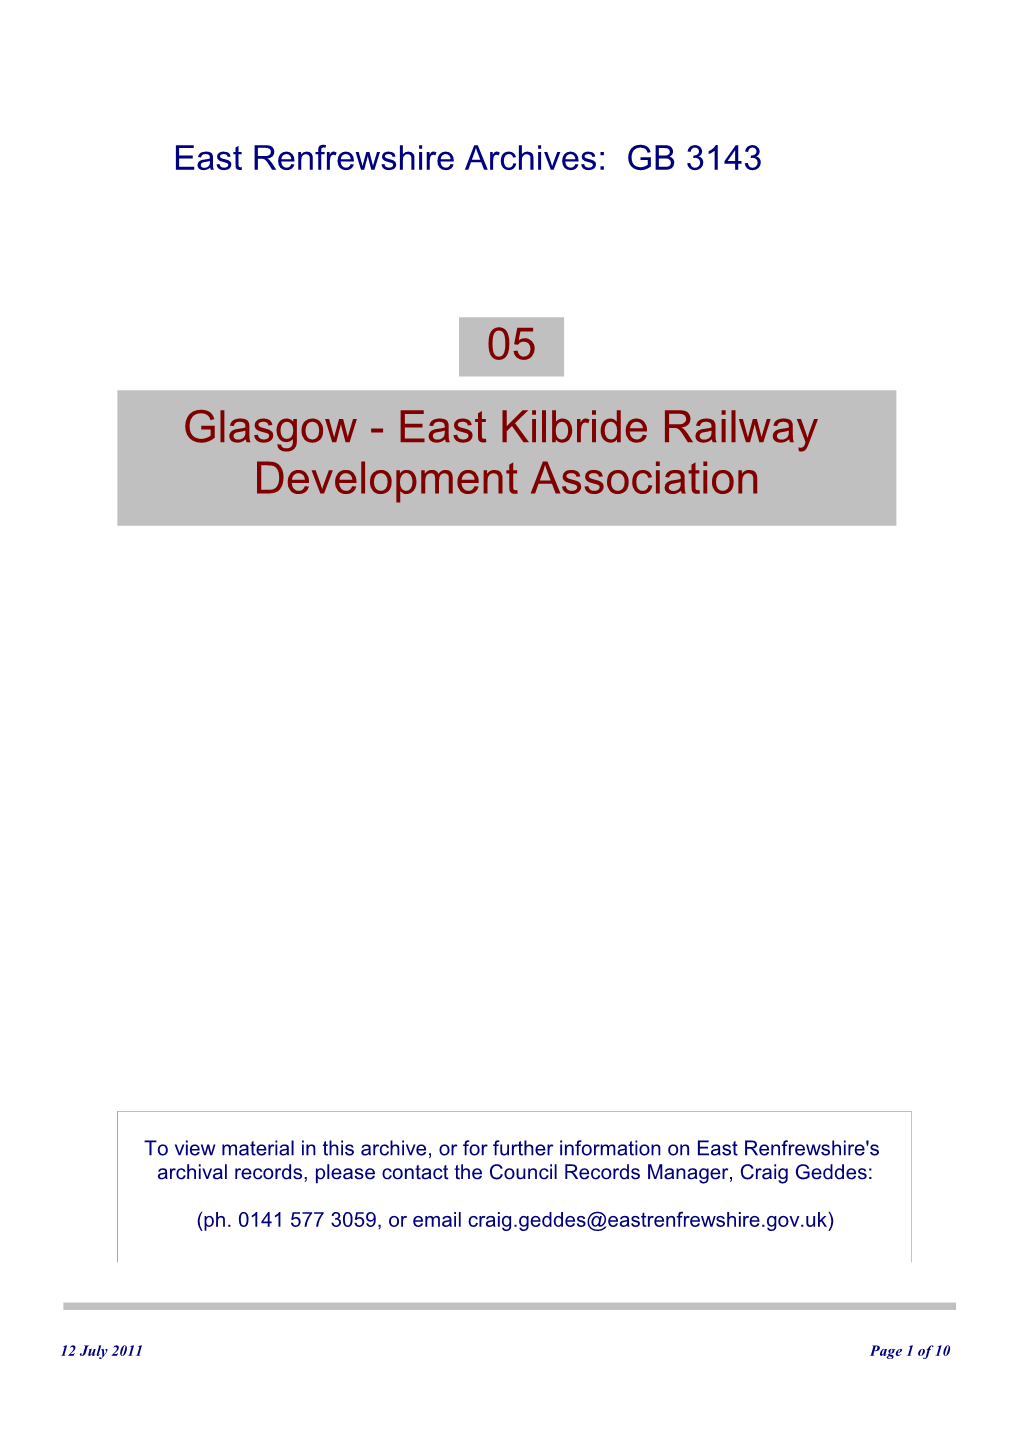 05 Glasgow - East Kilbride Railway Development Association